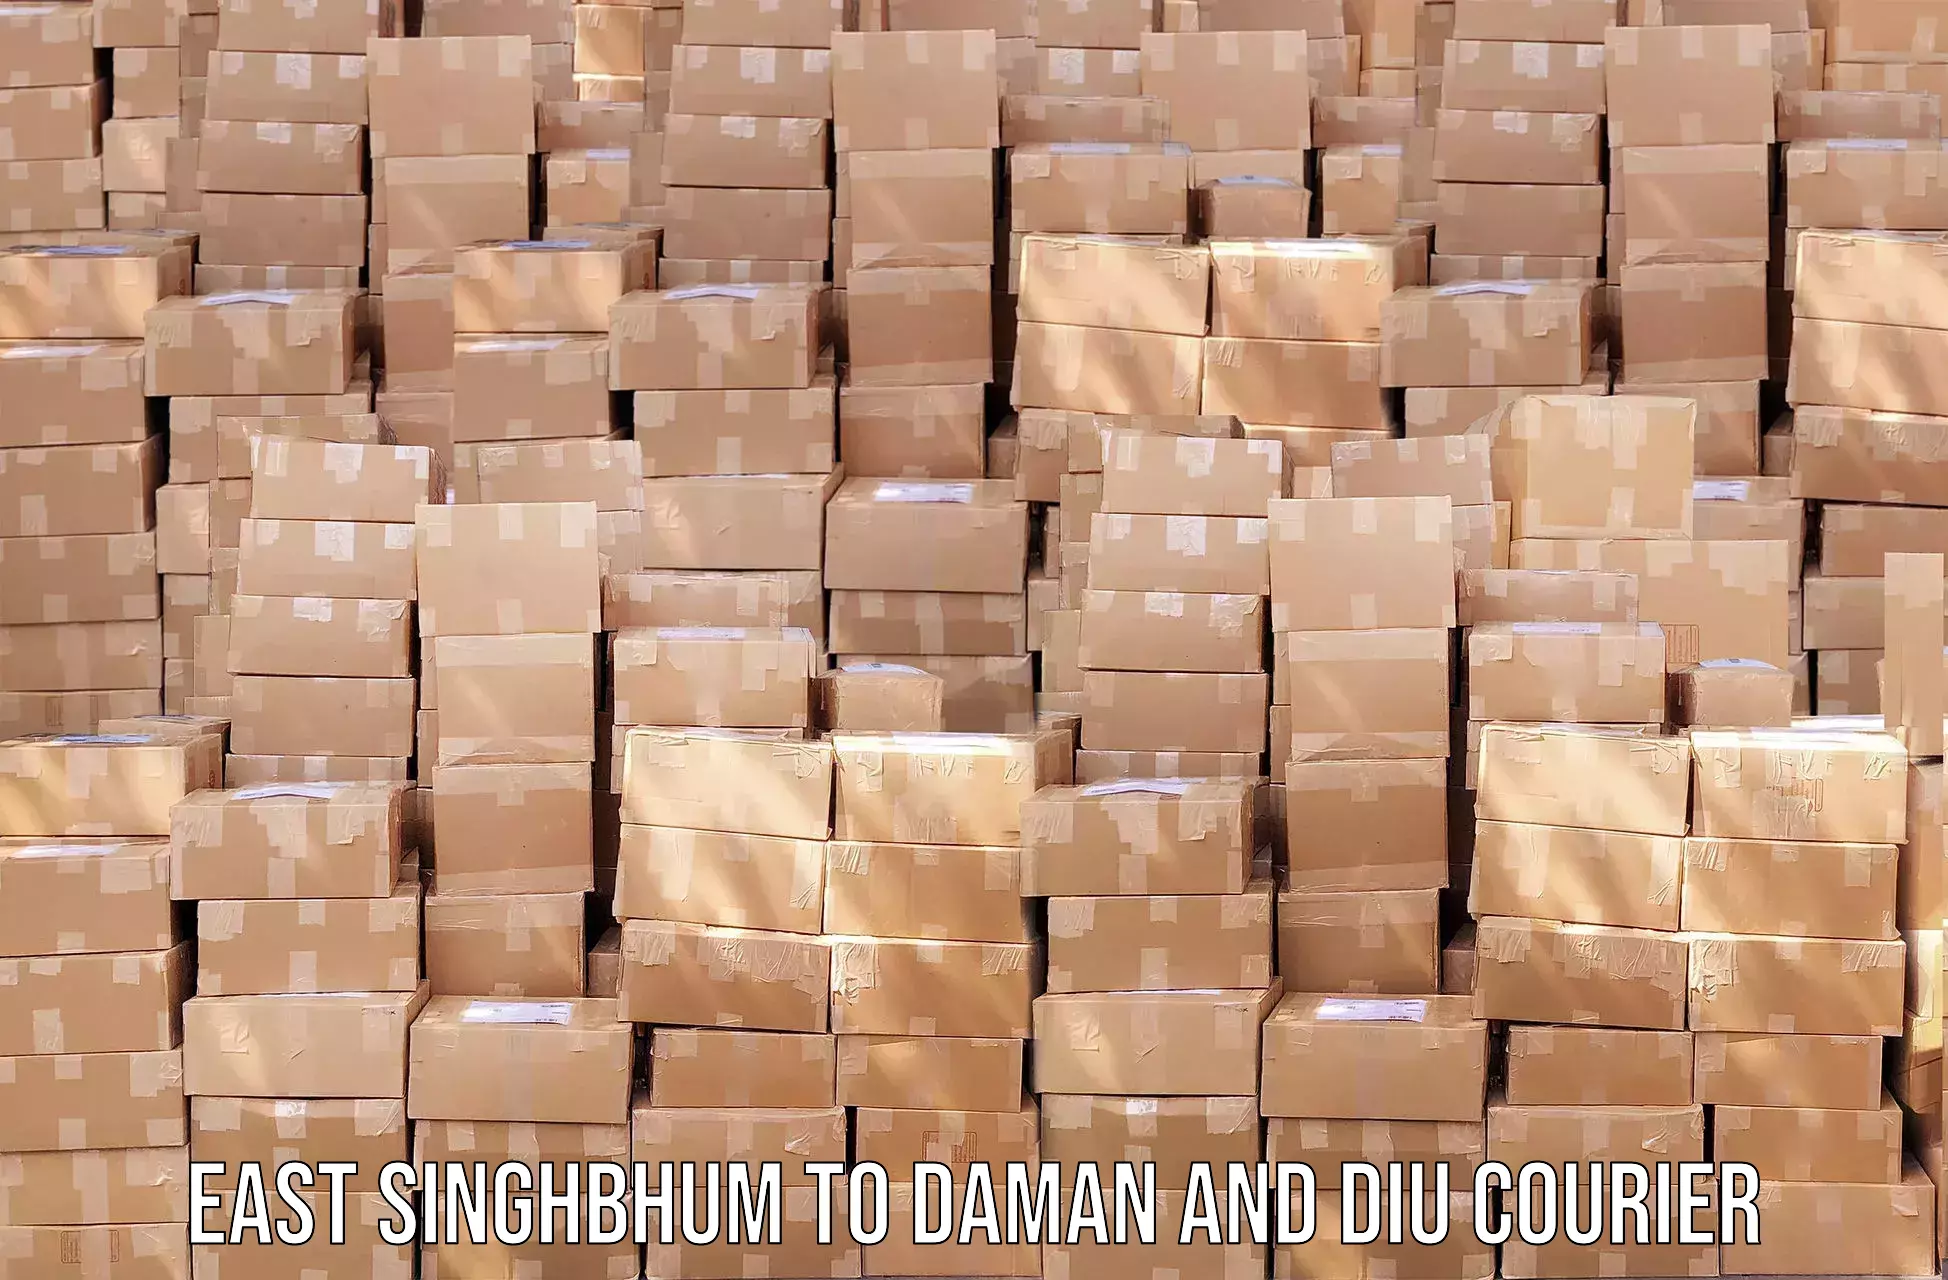 Professional courier handling East Singhbhum to Diu